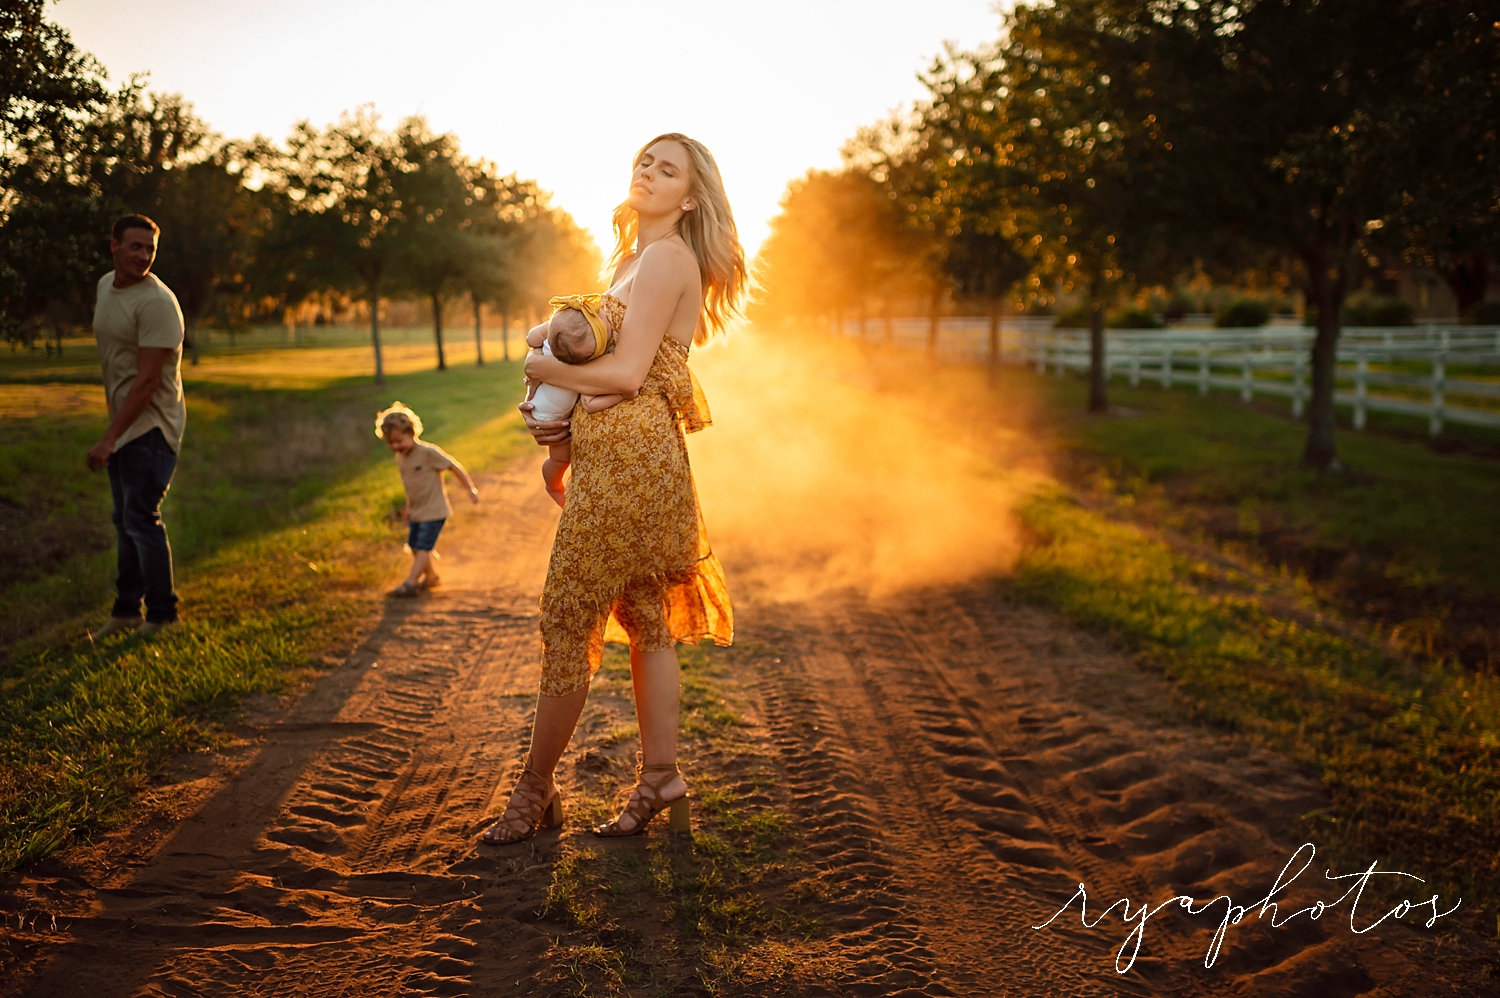 Ryaphotos, Ryan Lochte family portrait, spring family photo session, Jacksonville, Florida